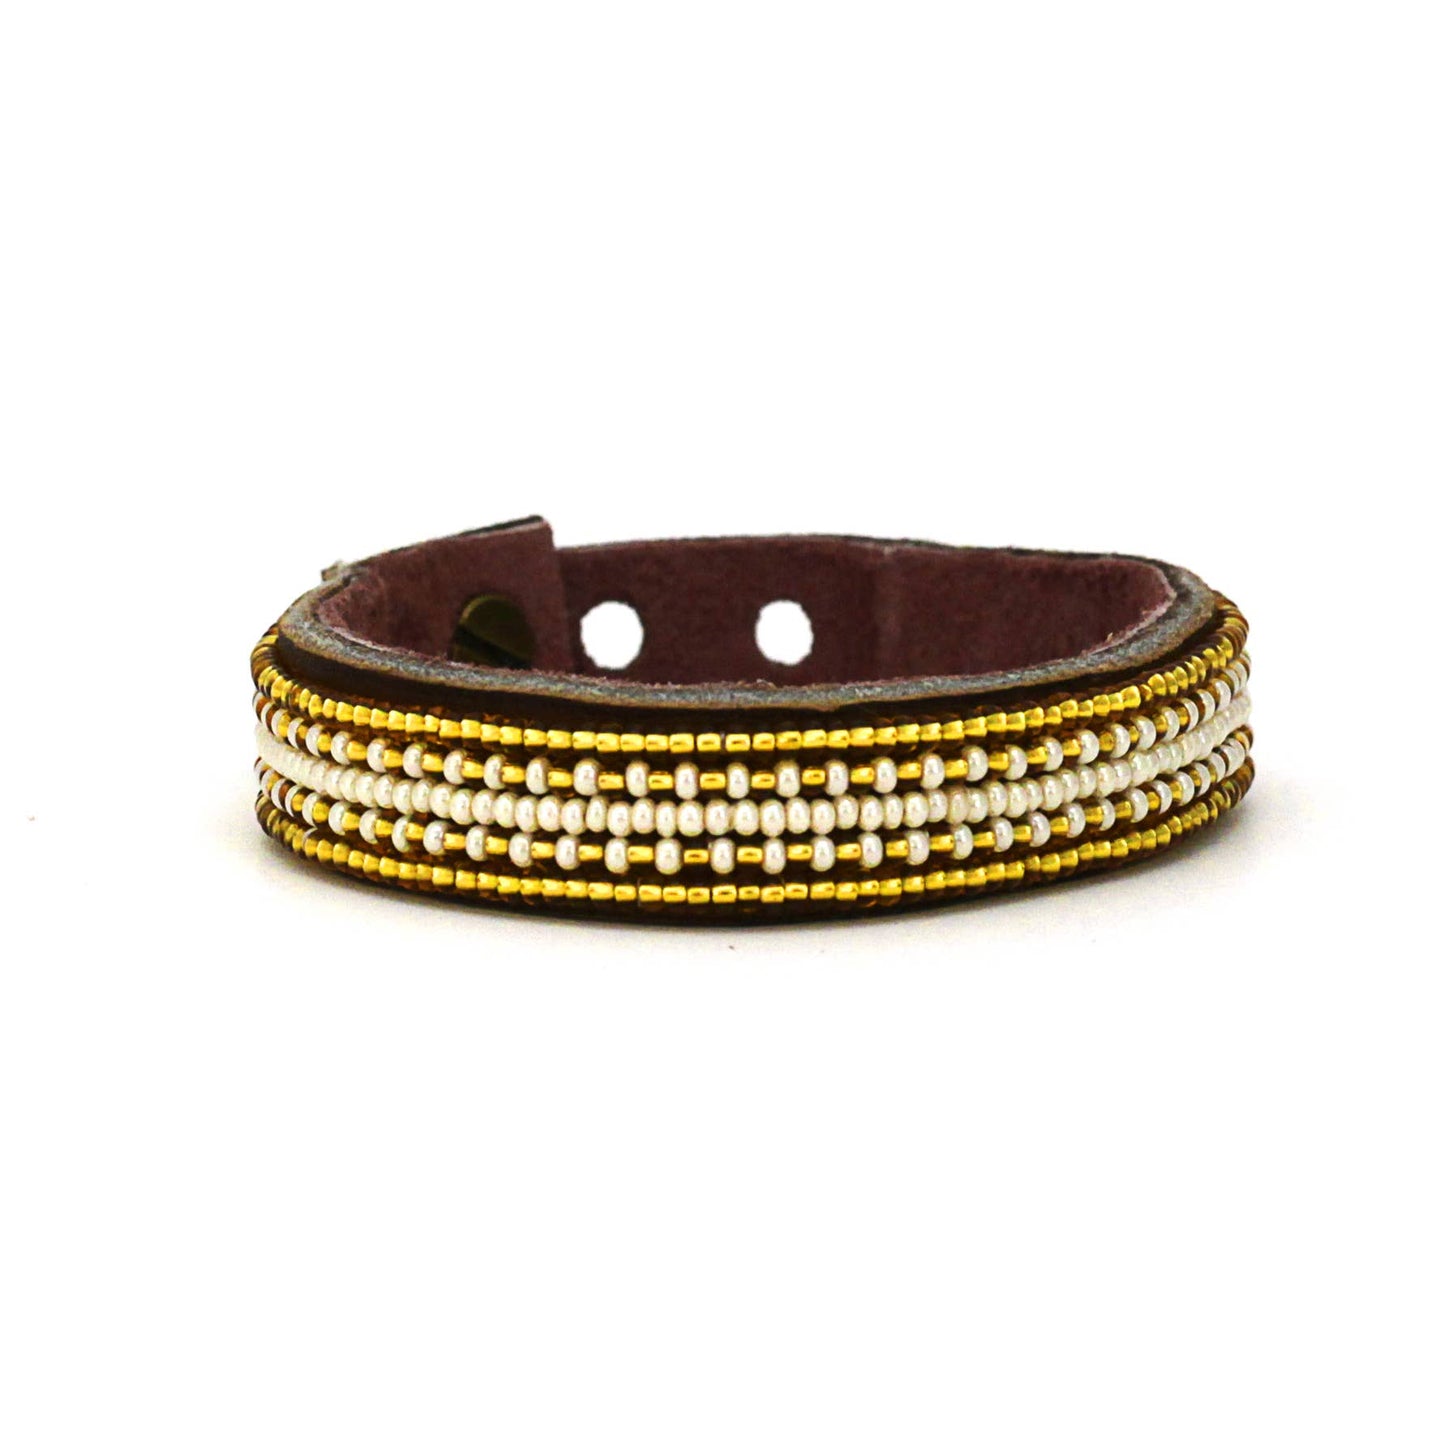 Swahili Coast - Small Gold and Pearl Stripe Leather Cuff